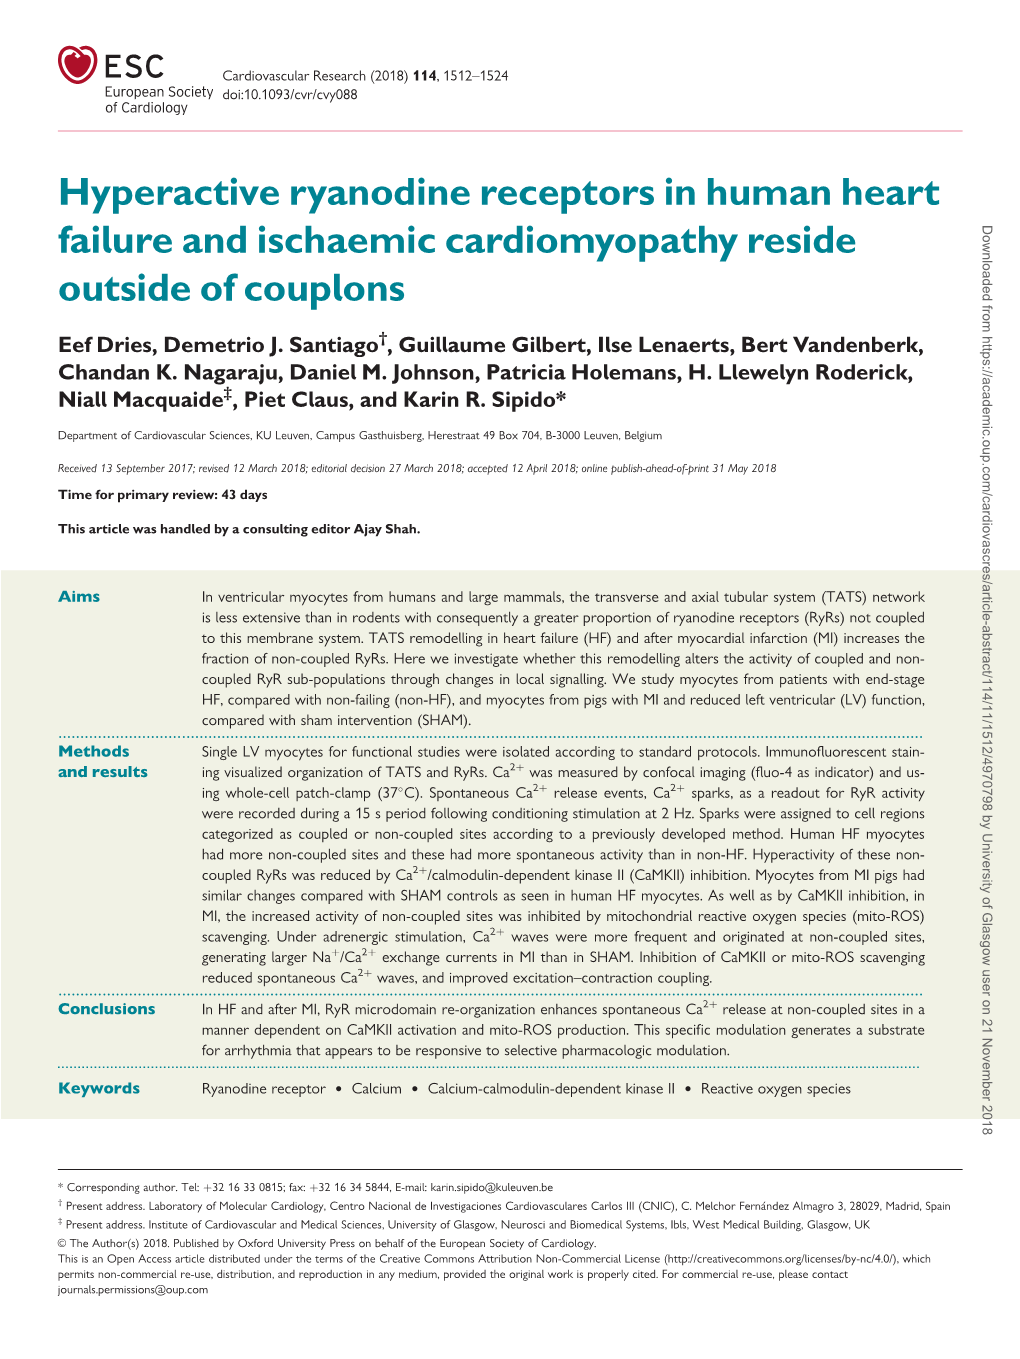 Hyperactive Ryanodine Receptors in Human Heart Failure and Ischaemic